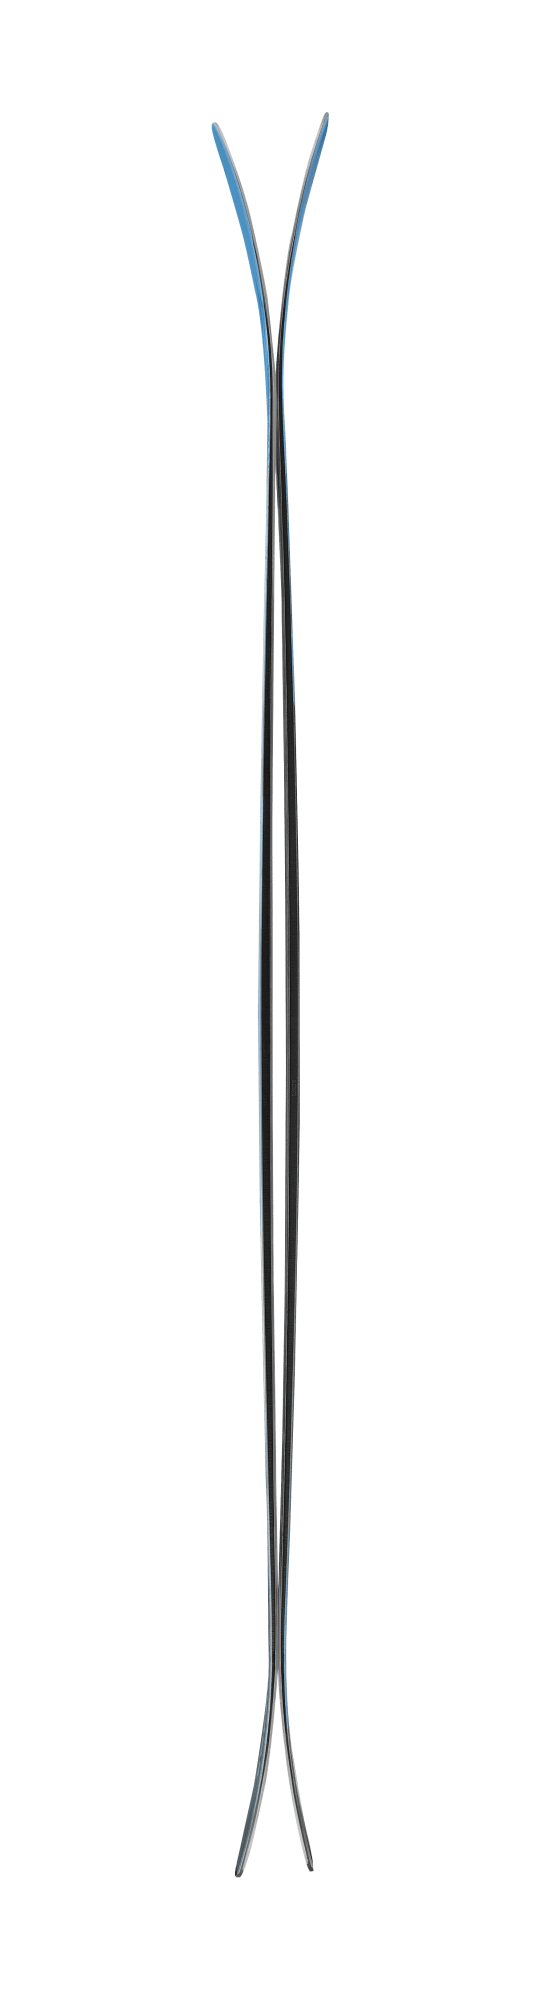 Nordica Enforcer 104 Free Skis · 2023 · 165 cm